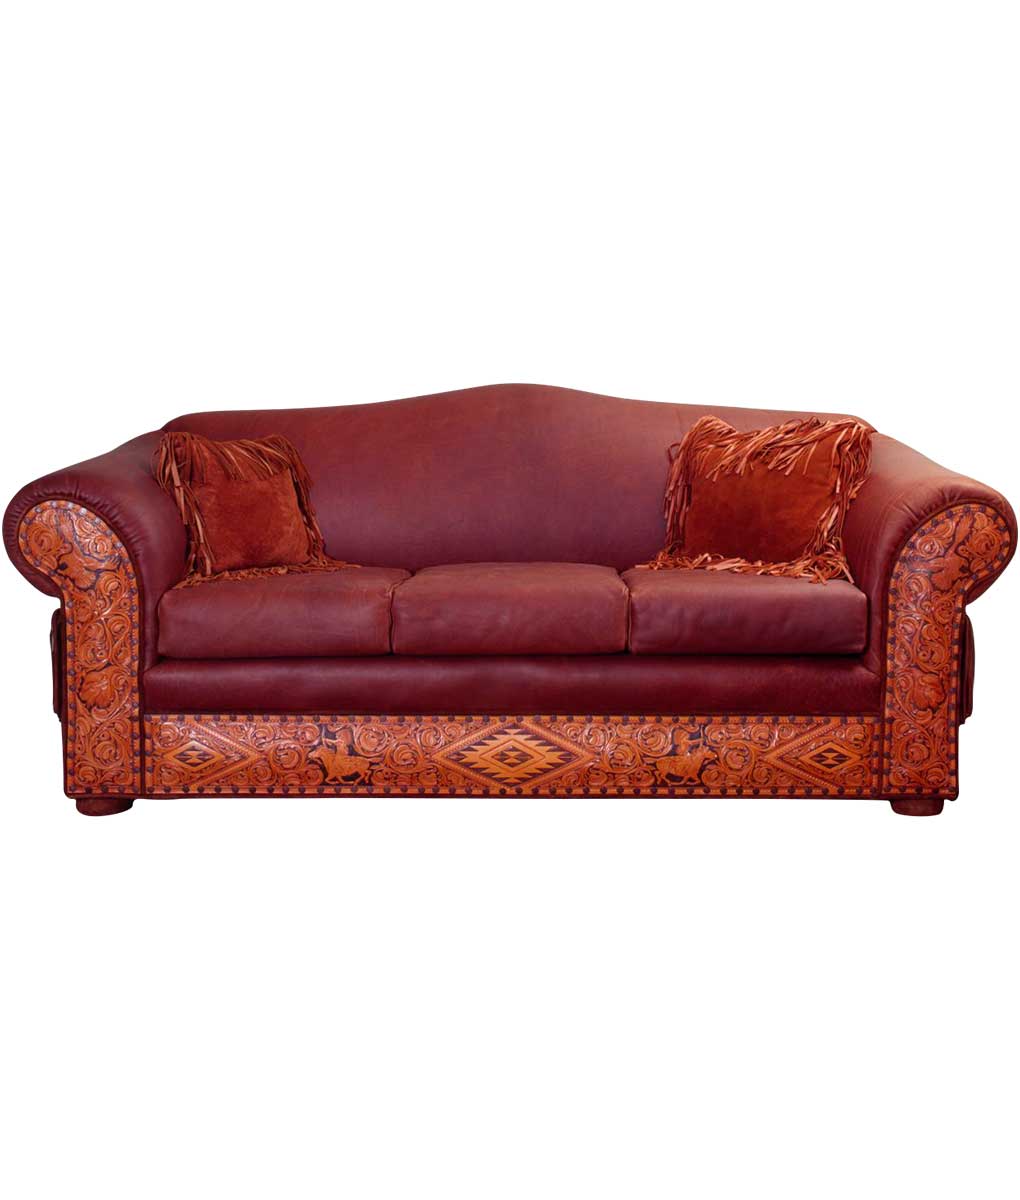 Hand Tooled Leather Sofa Elegant, Leather Rustic Sofa